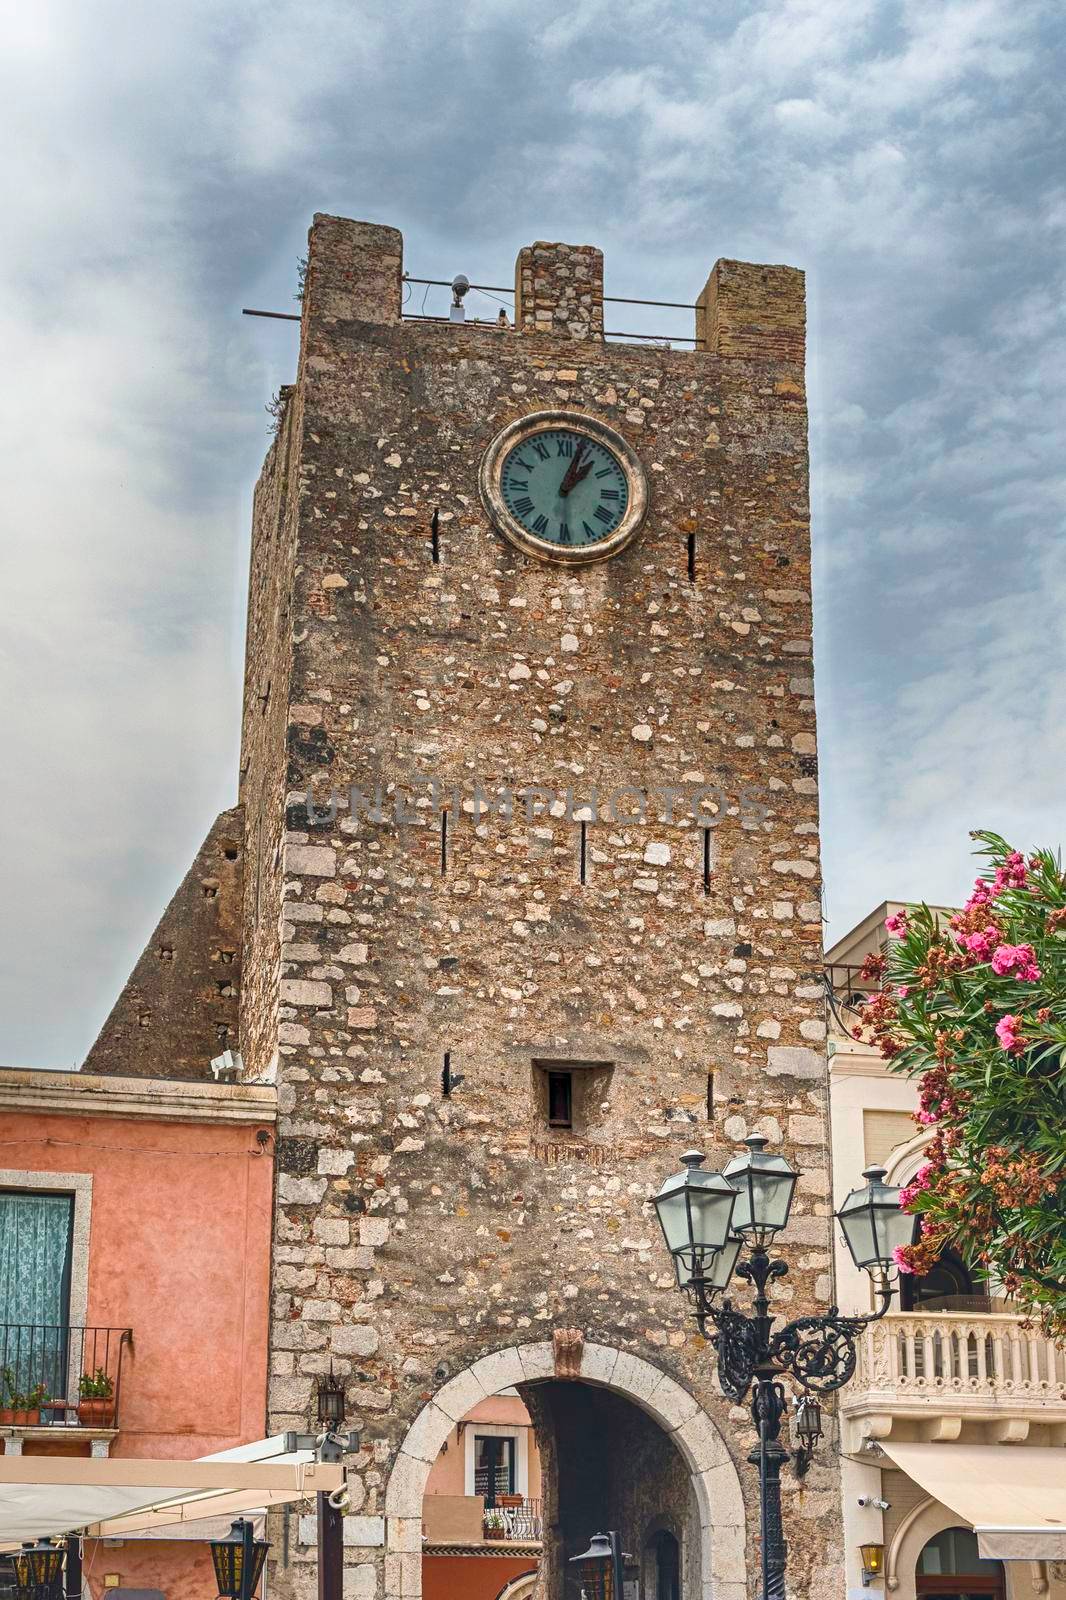 Ancient clocktower, iconic landmark in Taormina, Sicily, Italy by marcorubino